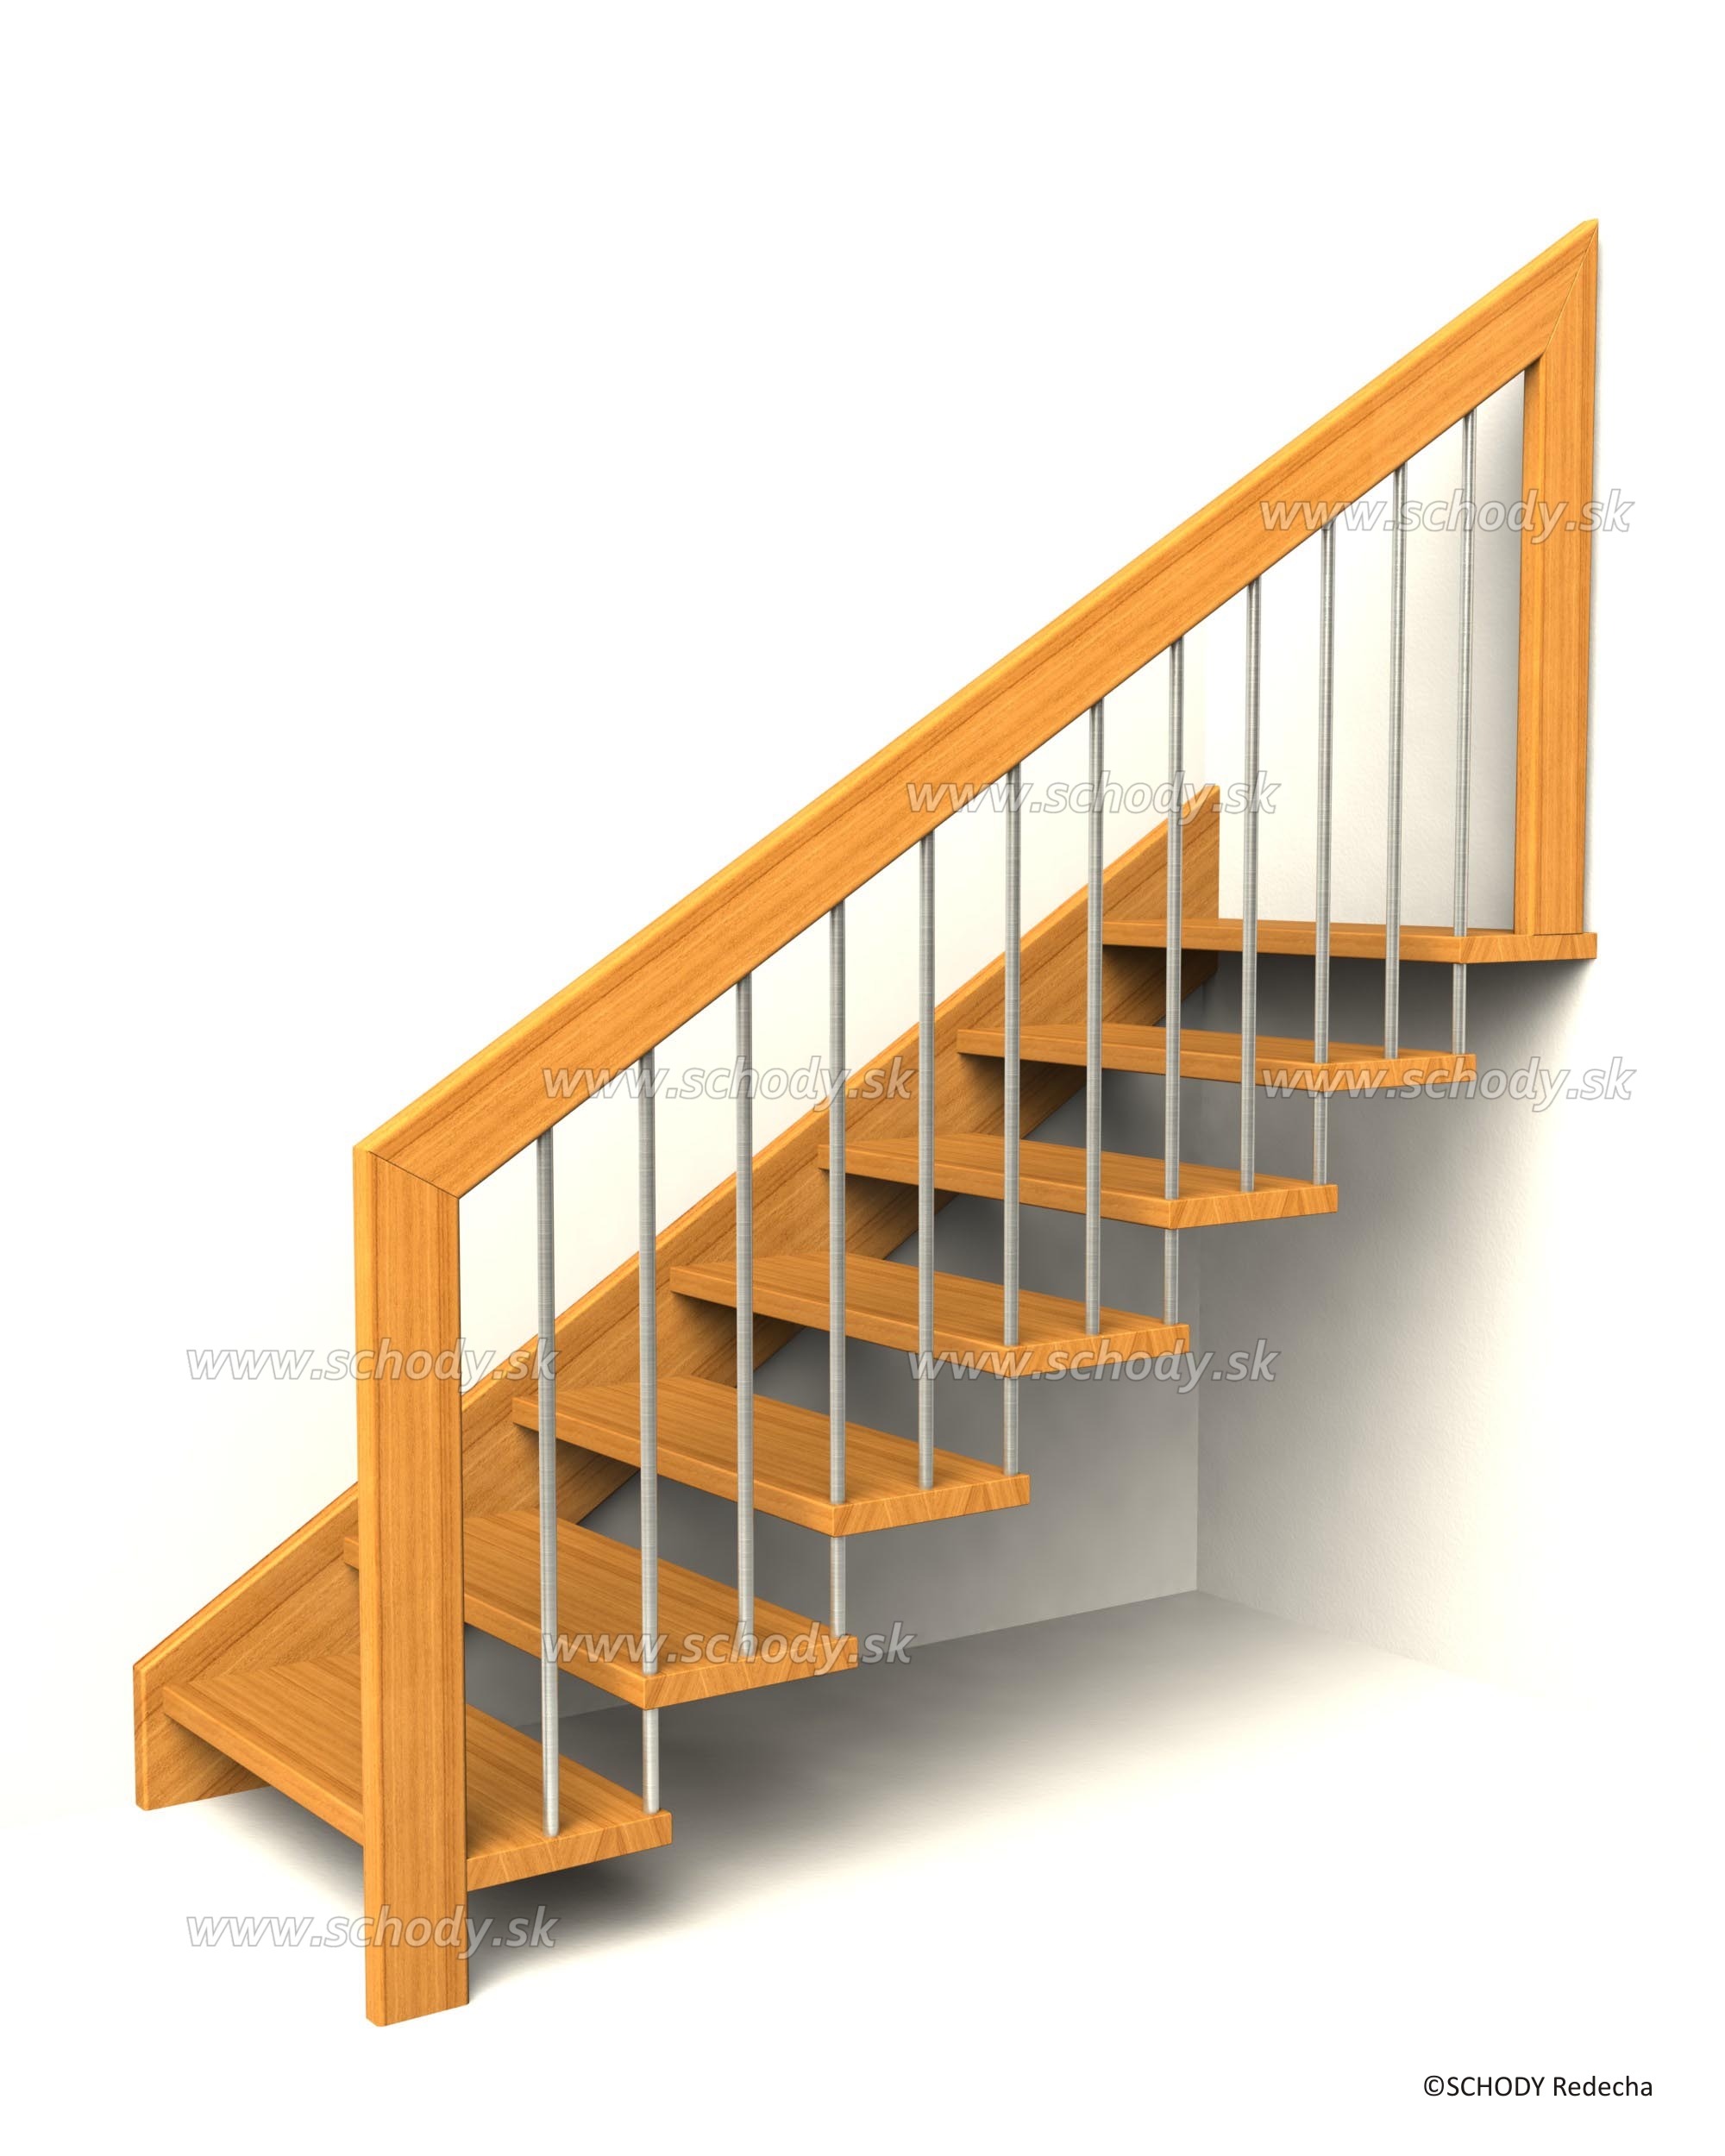 zavesne schody IX24